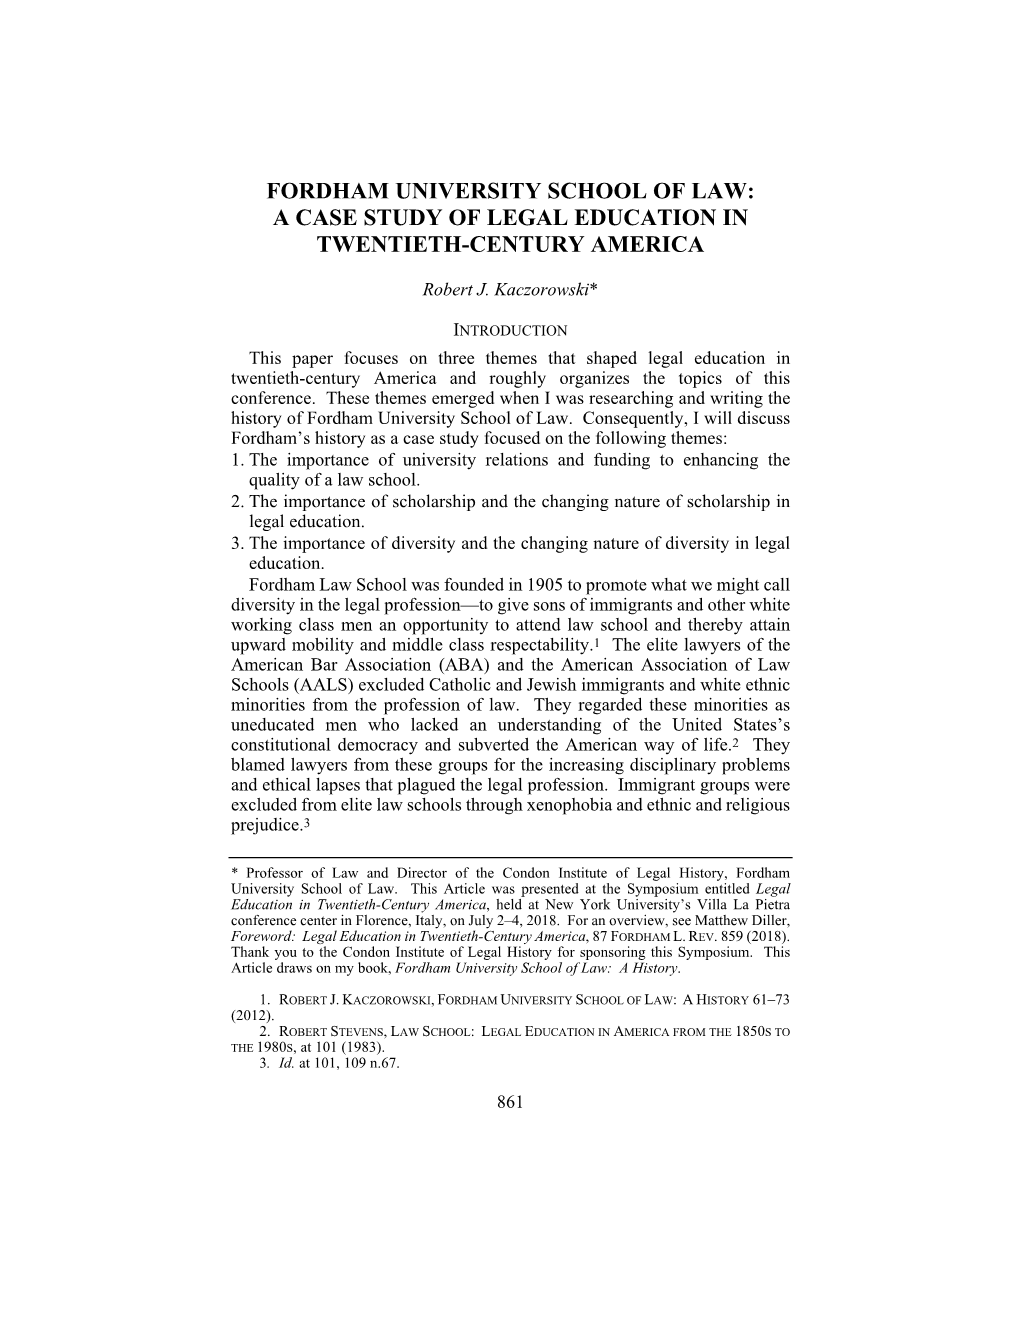 Fordham University School of Law: a Case Study of Legal Education in Twentieth-Century America